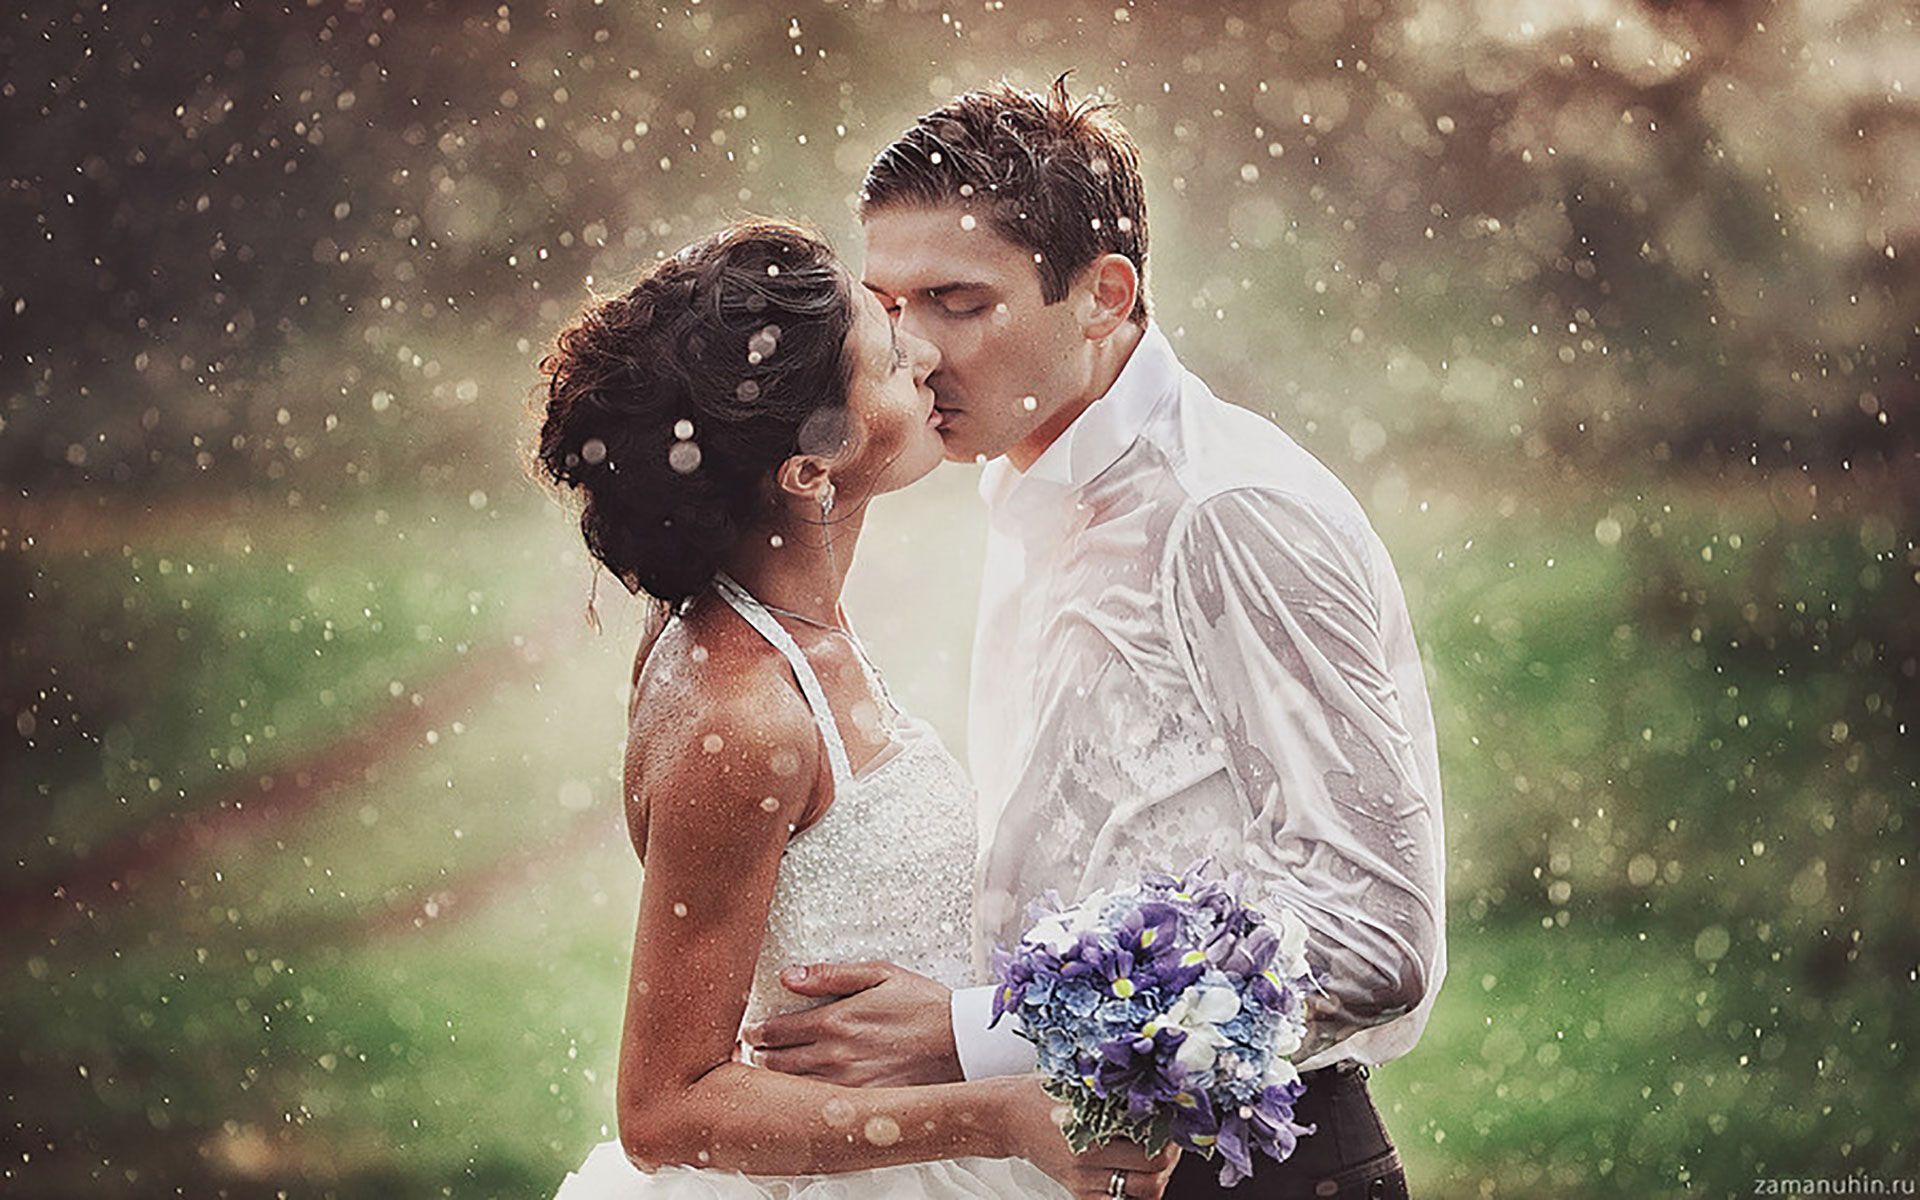 Passionate kiss of married couple in rain. Romantic & Sad Couple